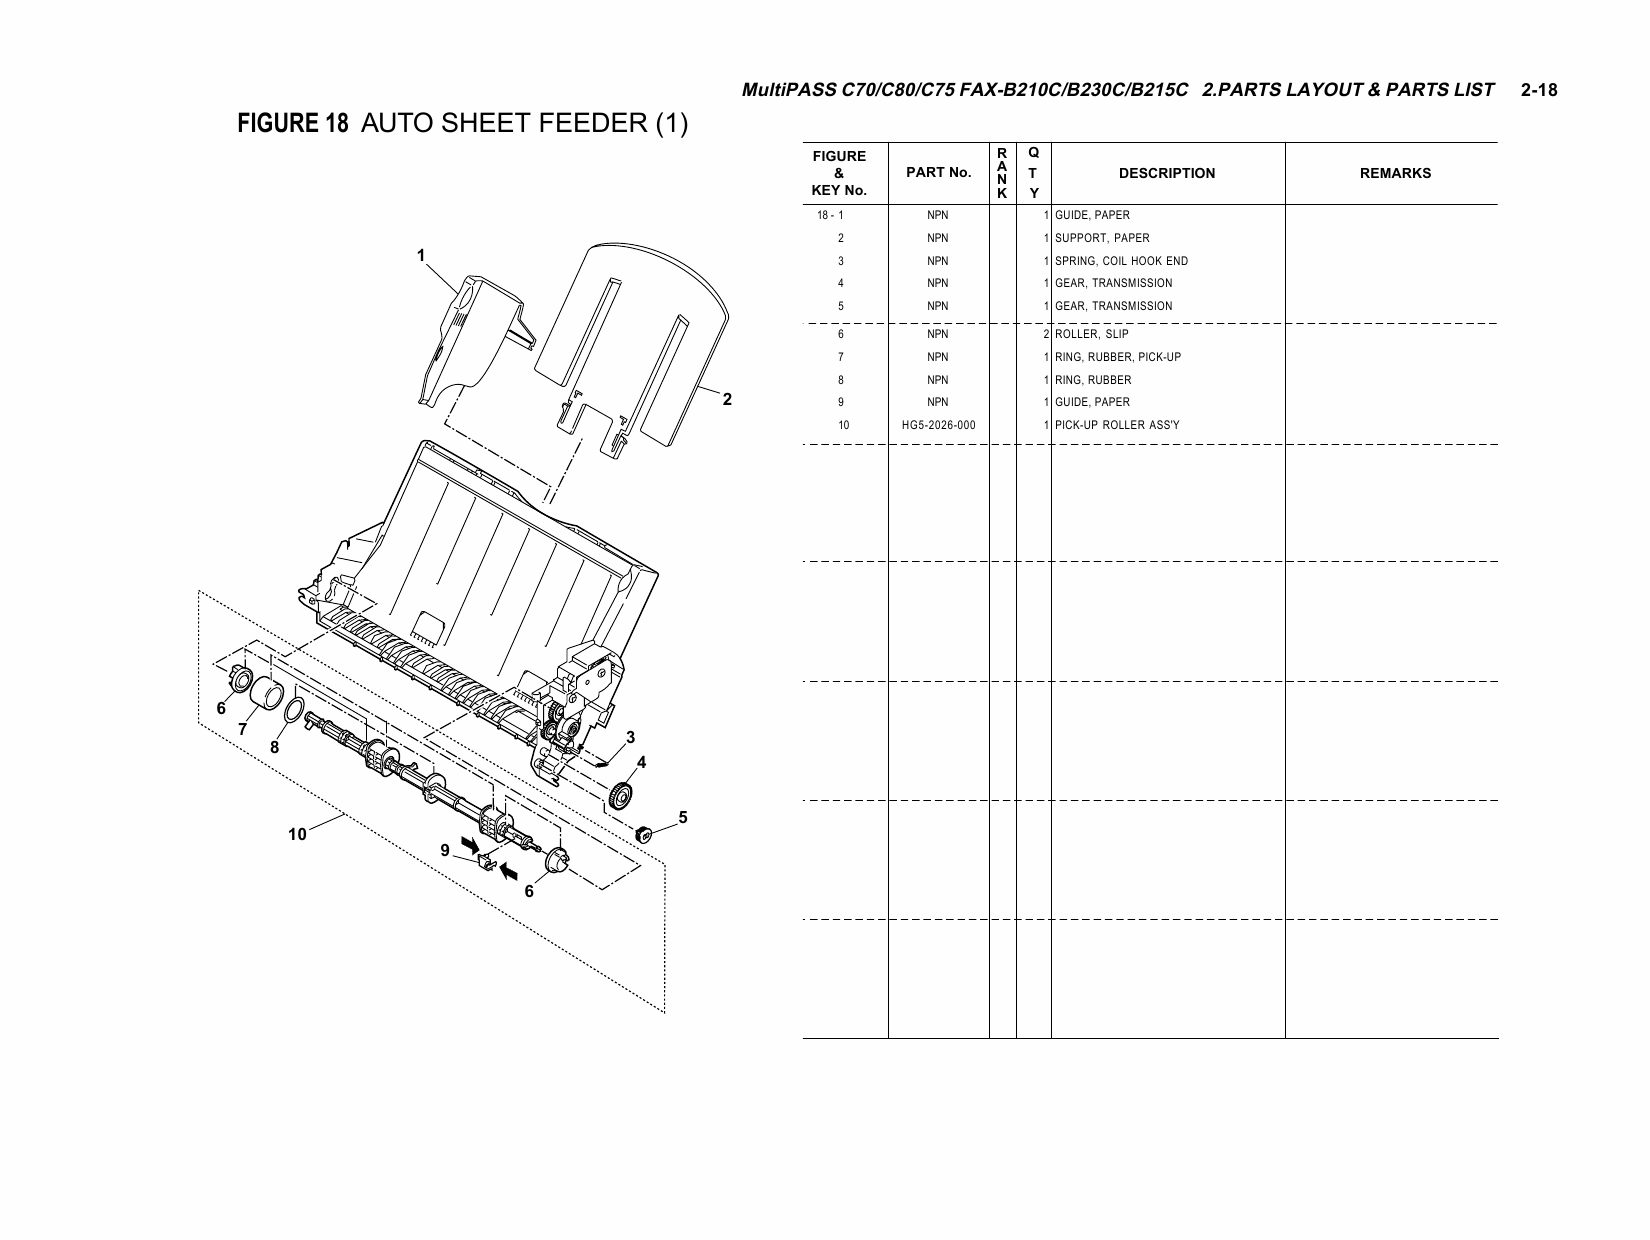 Canon MultiPASS MP-C70 C80 C75 Parts Catalog Manual-5